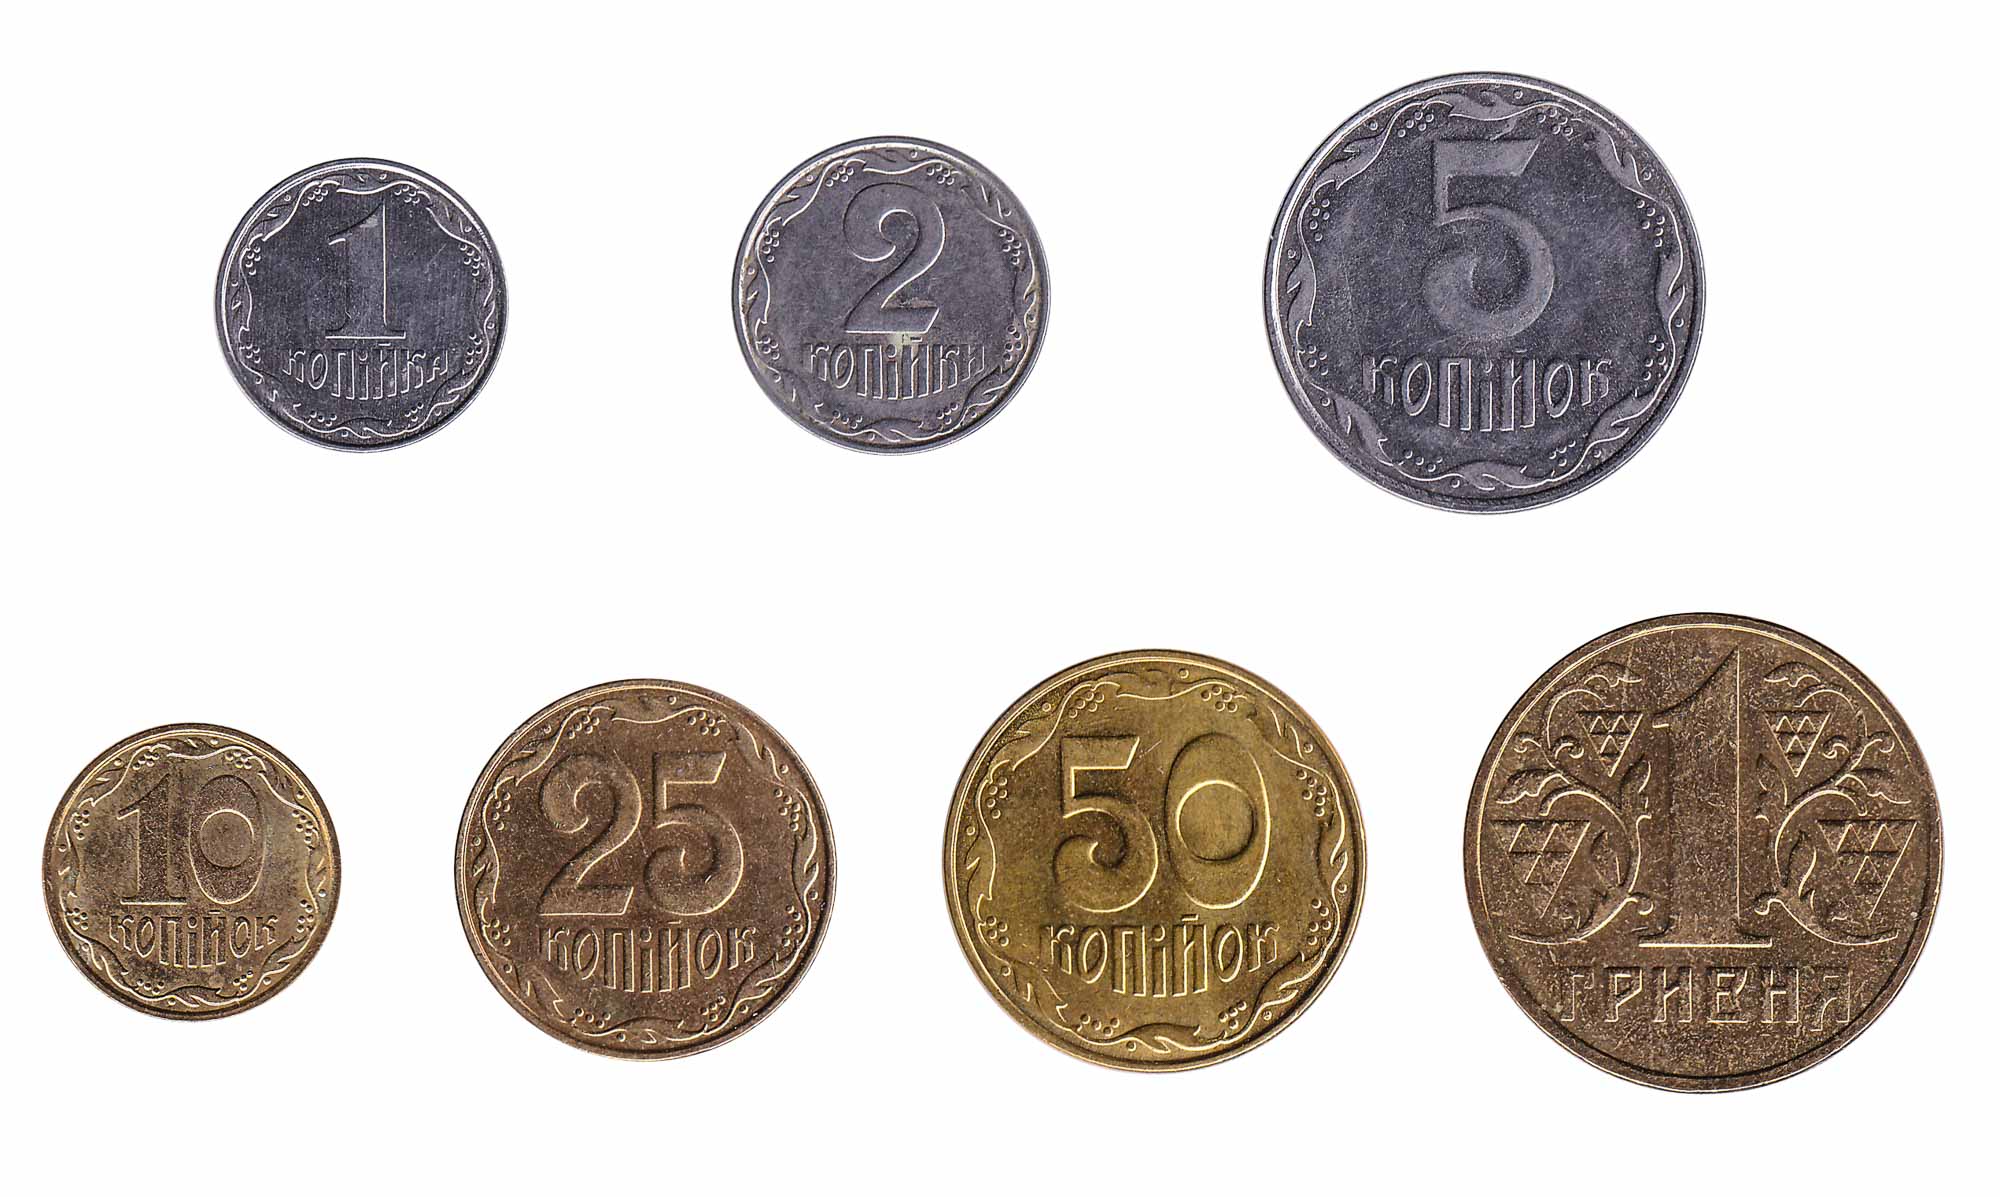 Exchange Ukrainian Hryvnia in 3 easy steps Leftover Currency